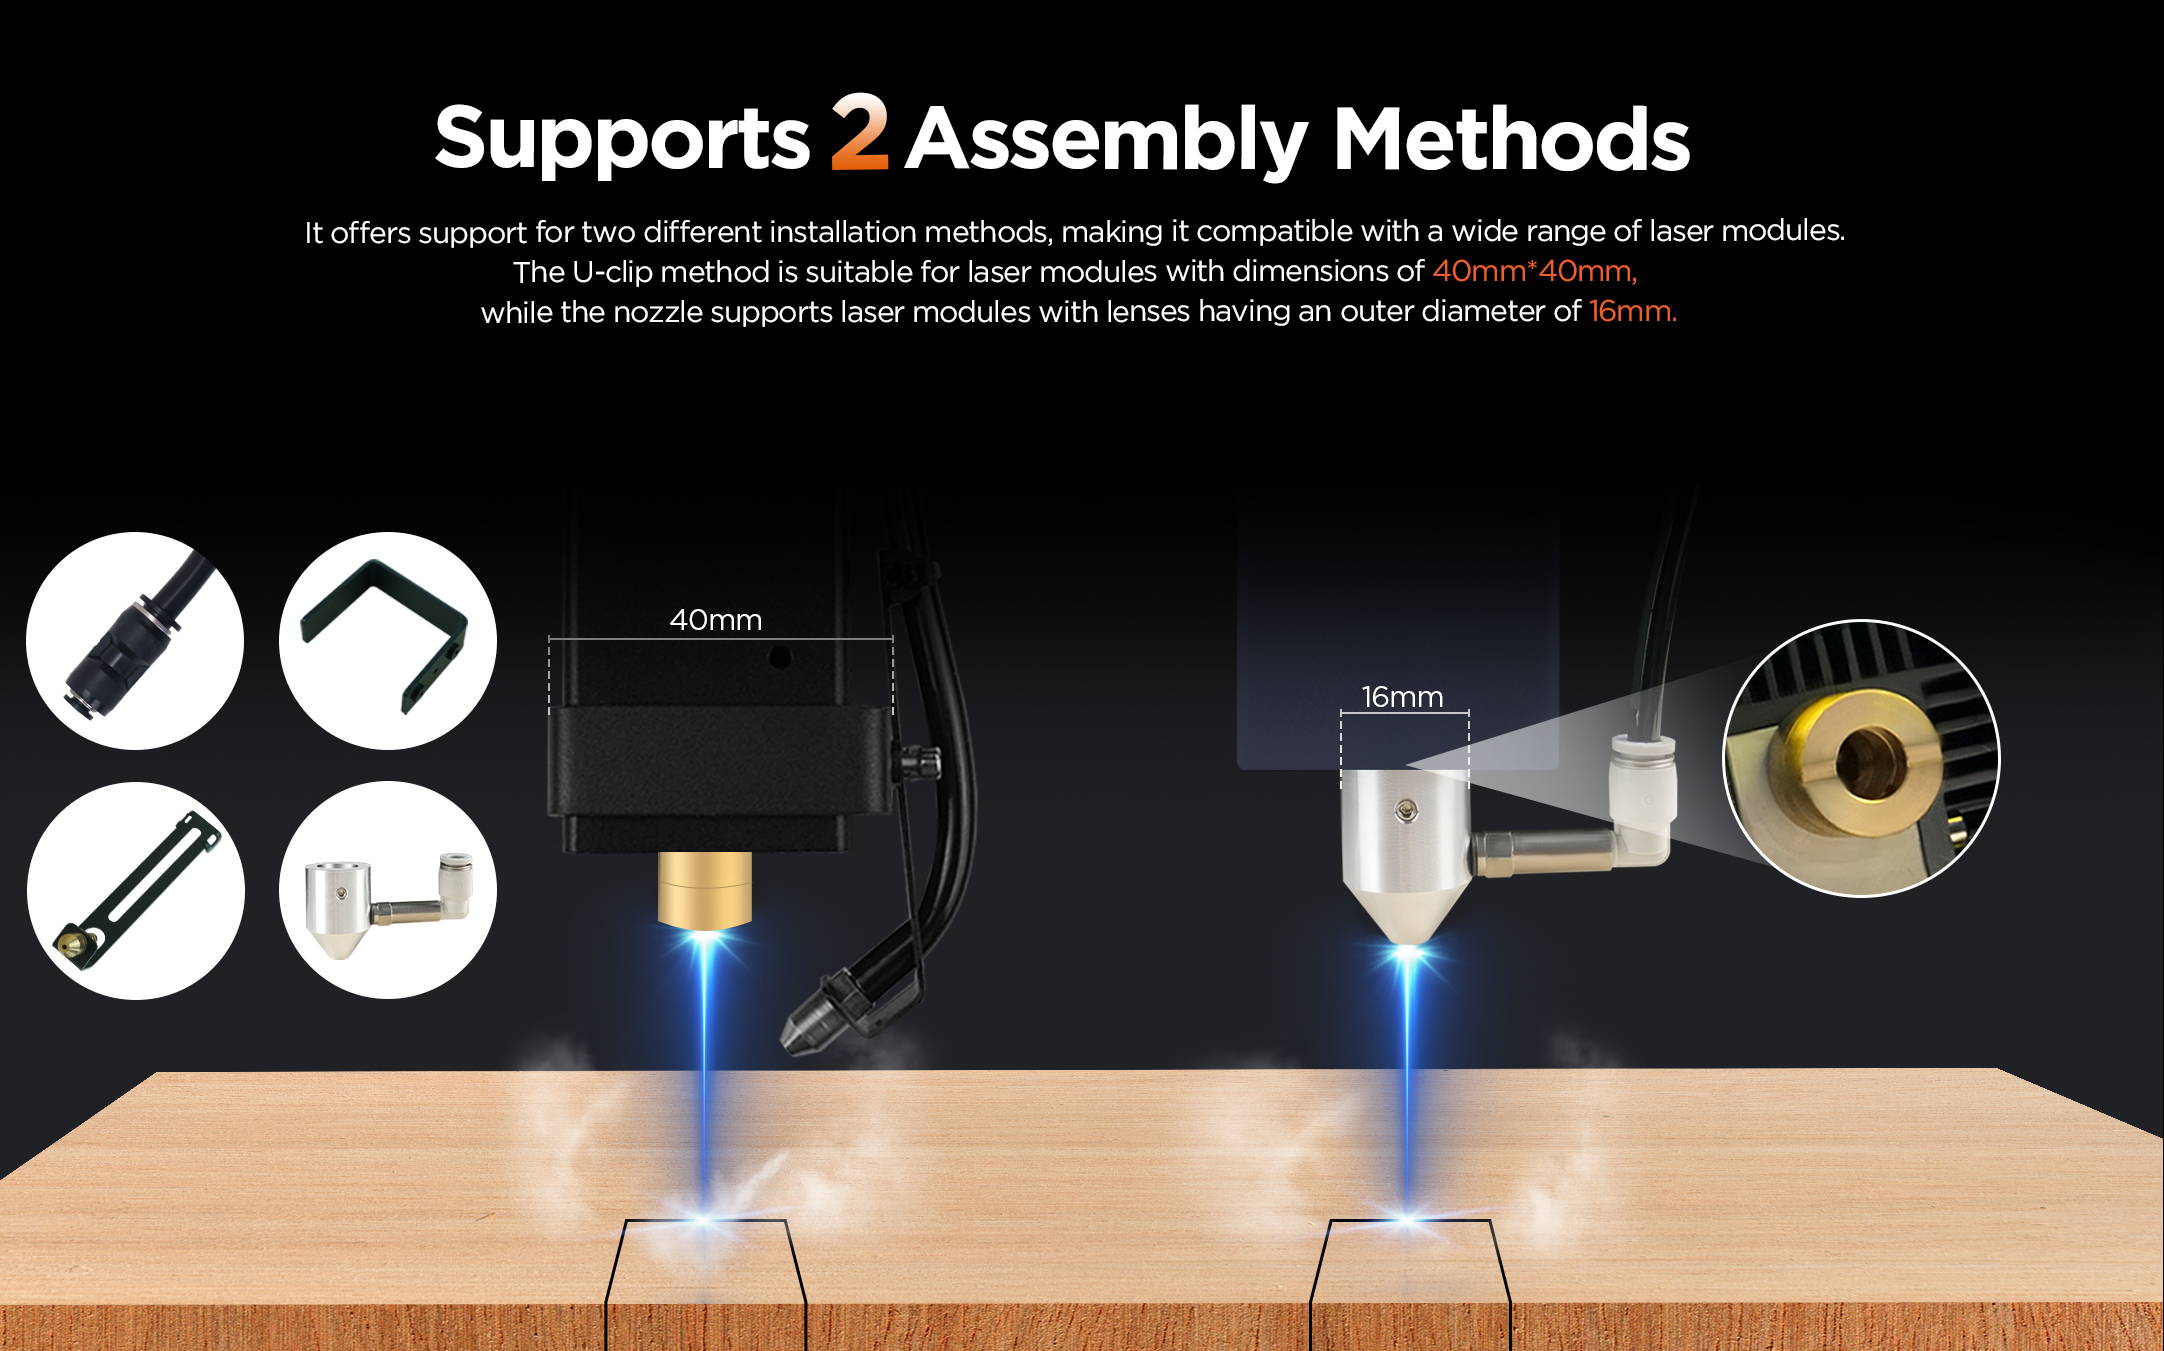 ACMER C4 laser air assist pump-assembly methods